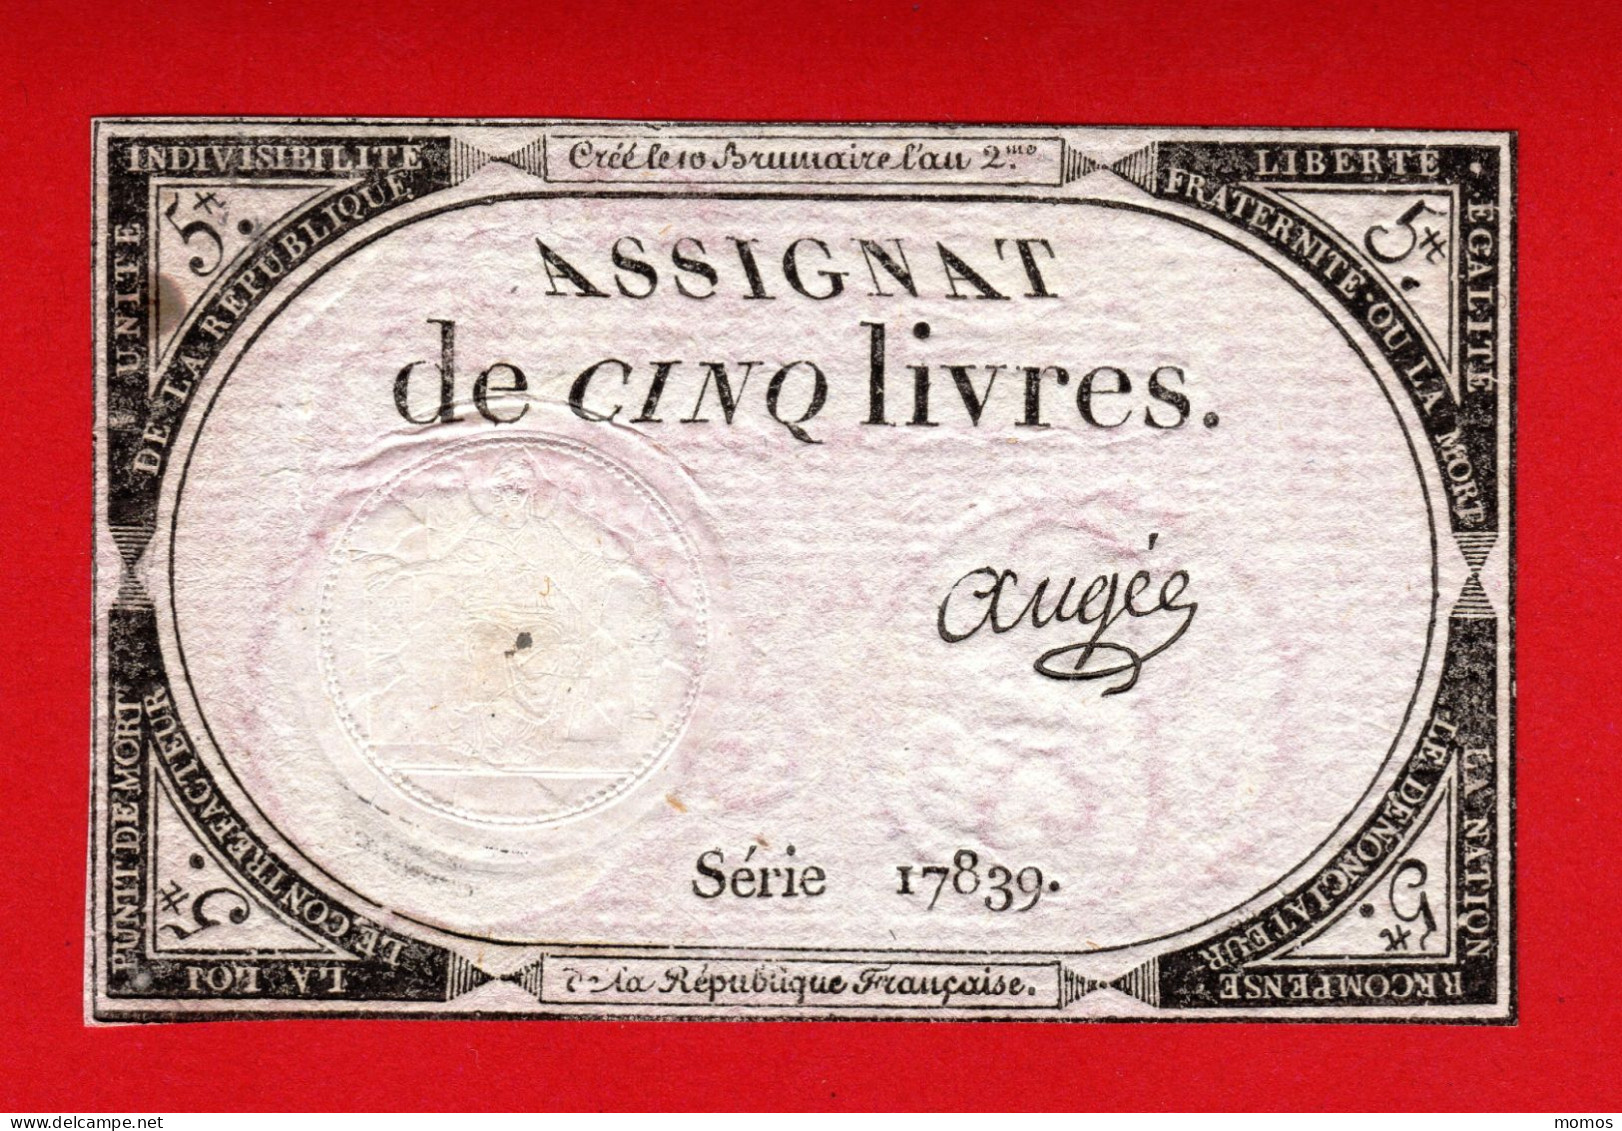 ASSIGNAT DE 5 LIVRES - 10 BRUMAIRE AN 2  (31 OCTOBRE 1793) - AUGEE - REVOLUTION FRANCAISE  D - Assignats & Mandats Territoriaux